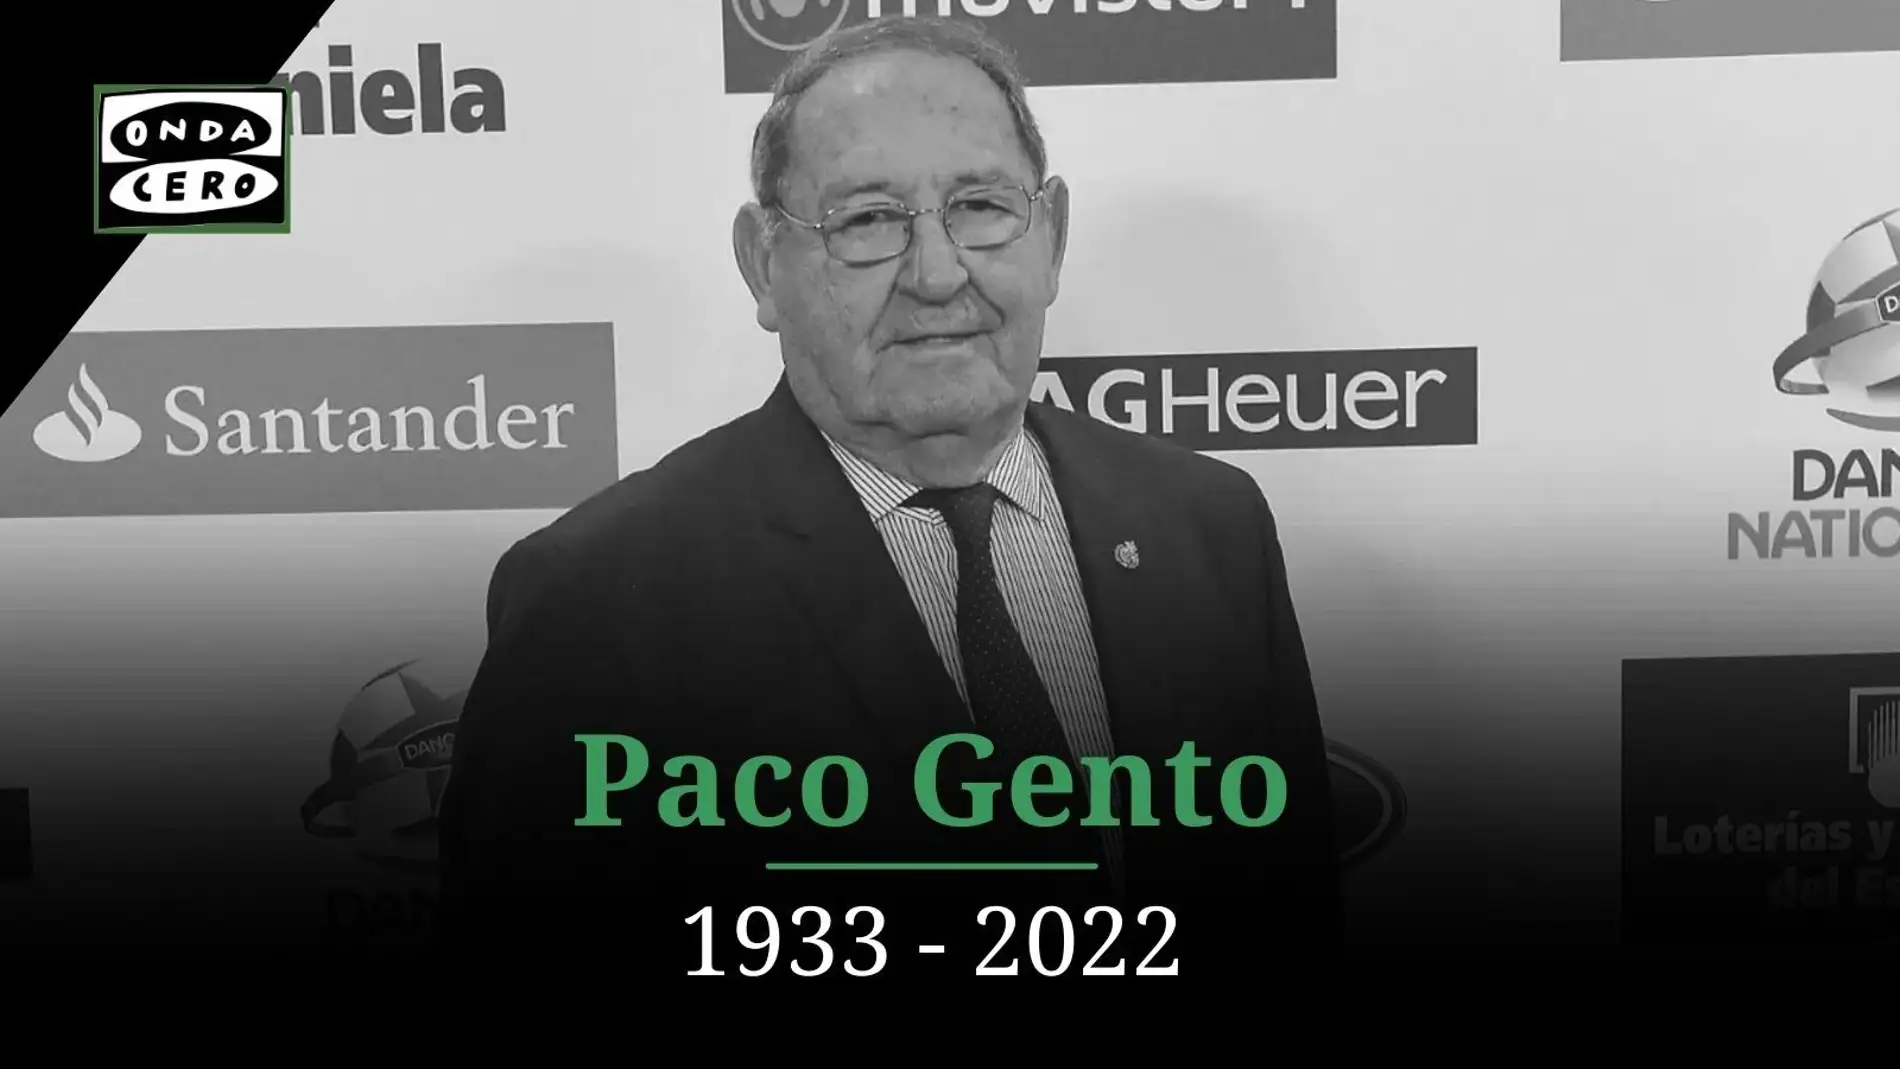 Muere Paco Gento, leyenda del Real Madrid.